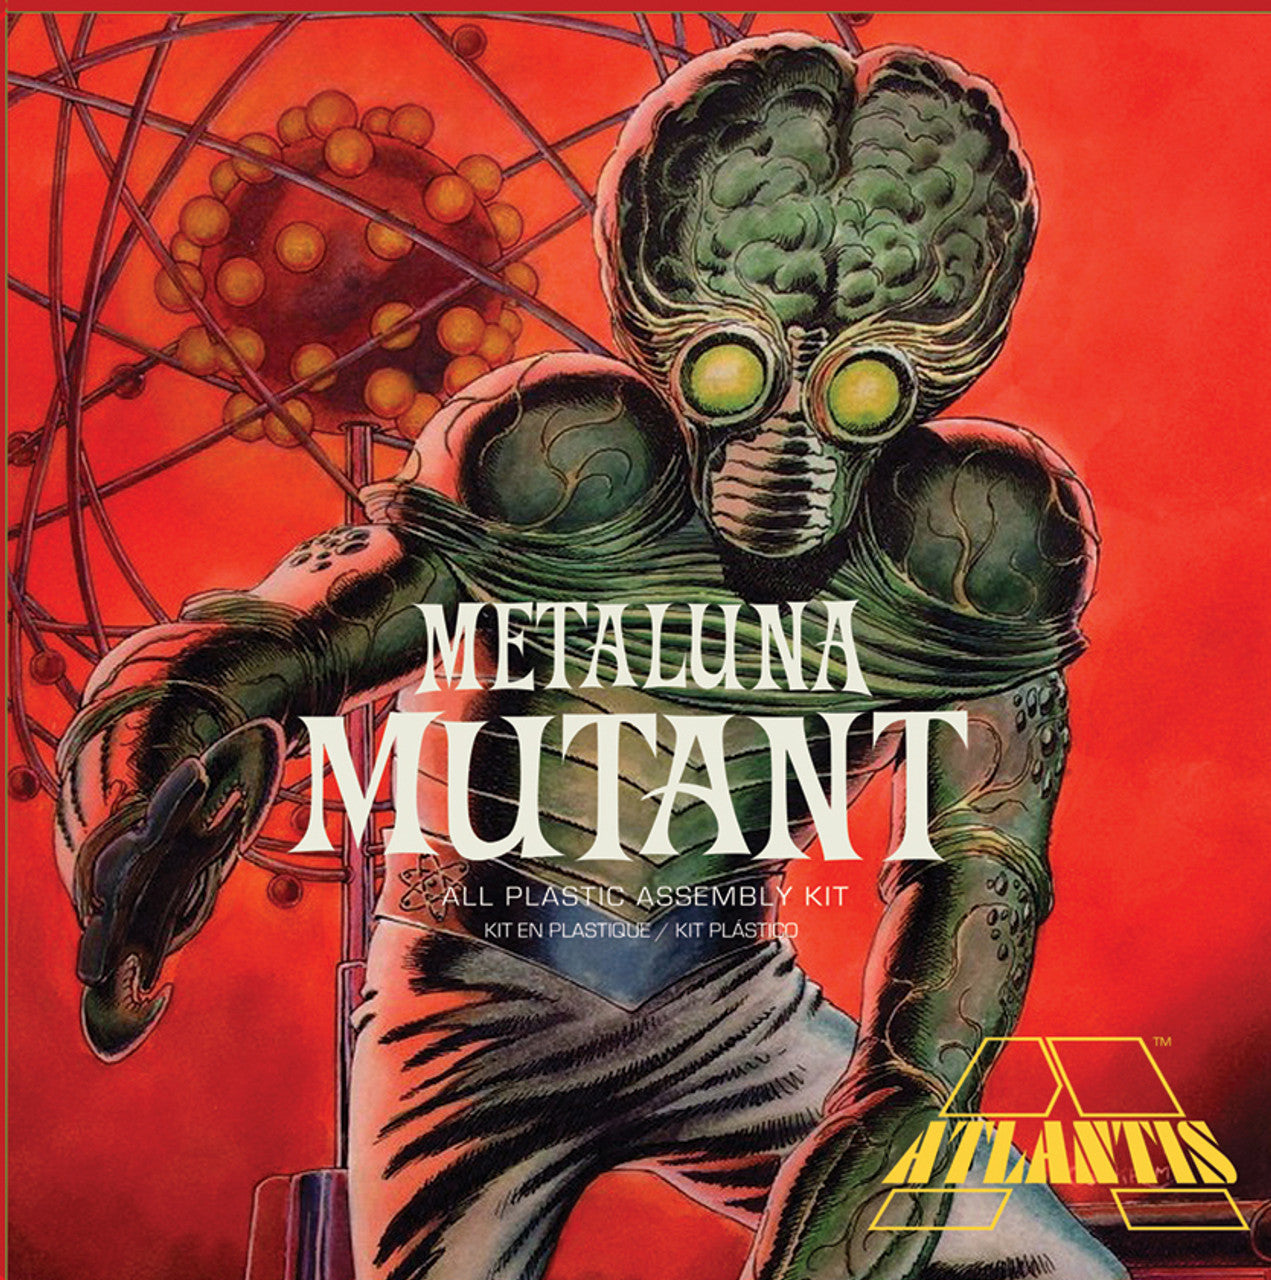 ATLANTIS 3005 Metaluna Mutant Monster Limited Edition 1/12 Scale Plastic Kit